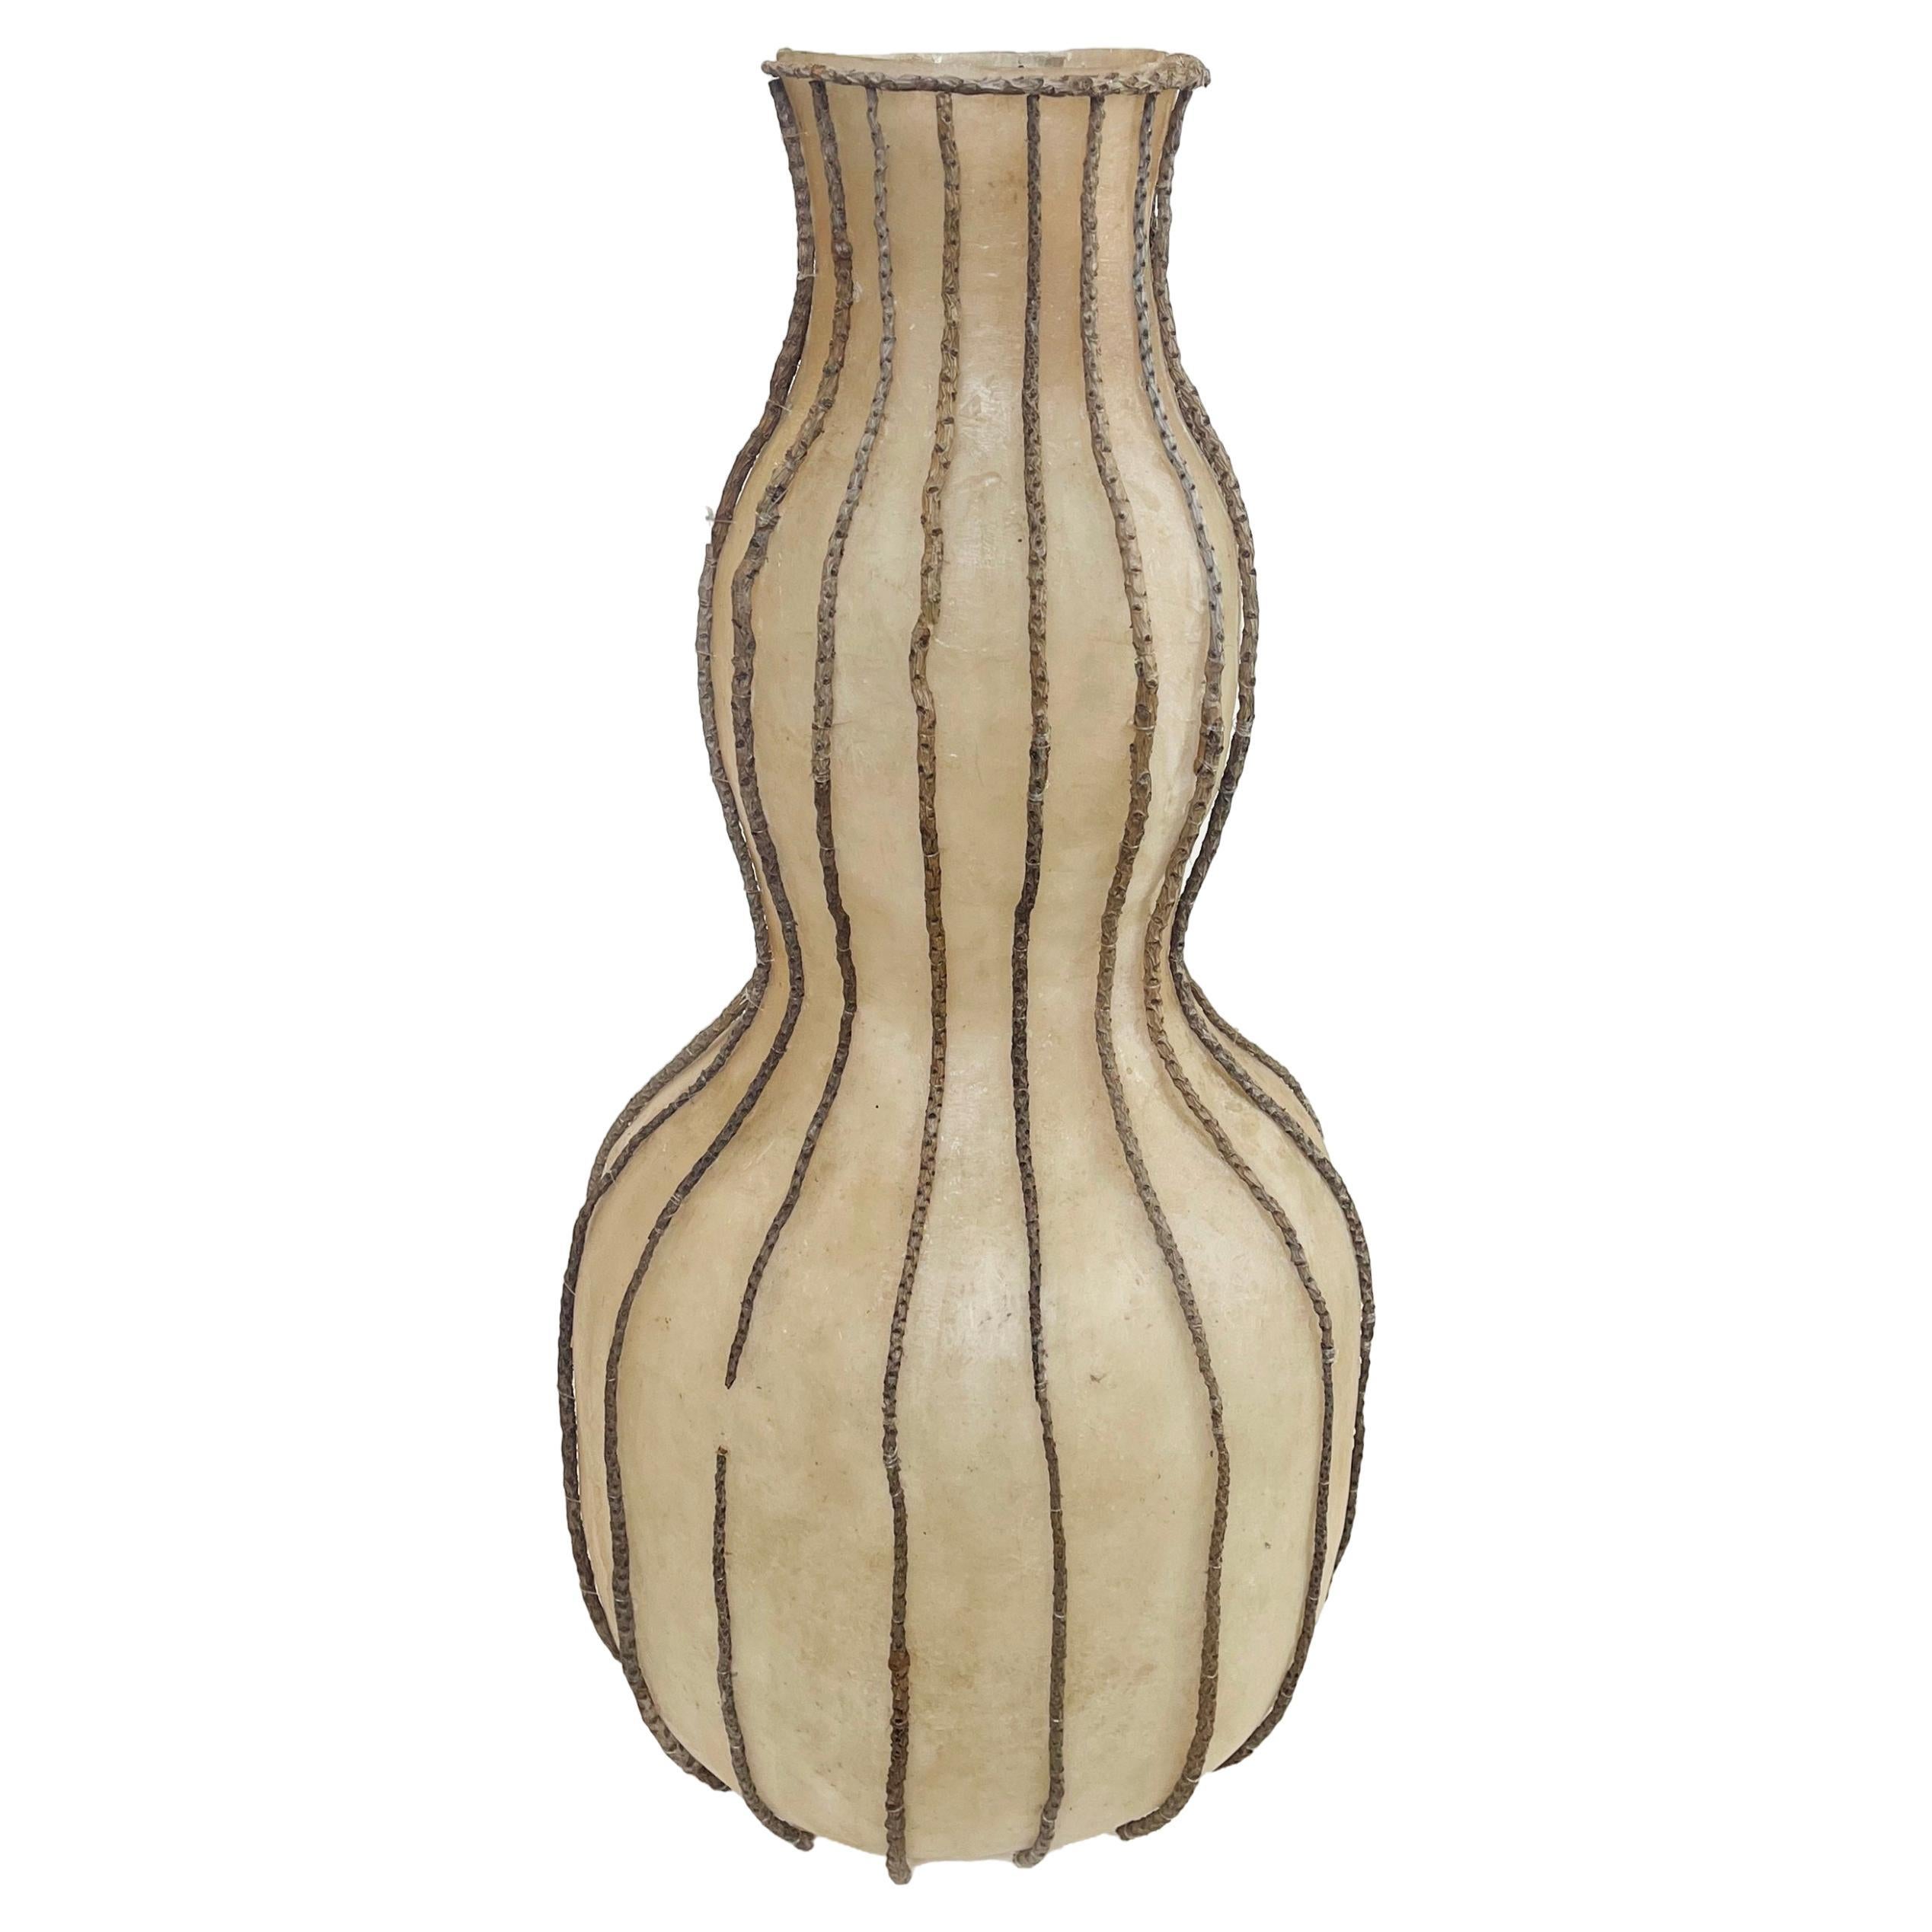 Modern Ethnic African Art Style Gourd Vessel or Vase Twigs & Fiberglass, 1970s For Sale